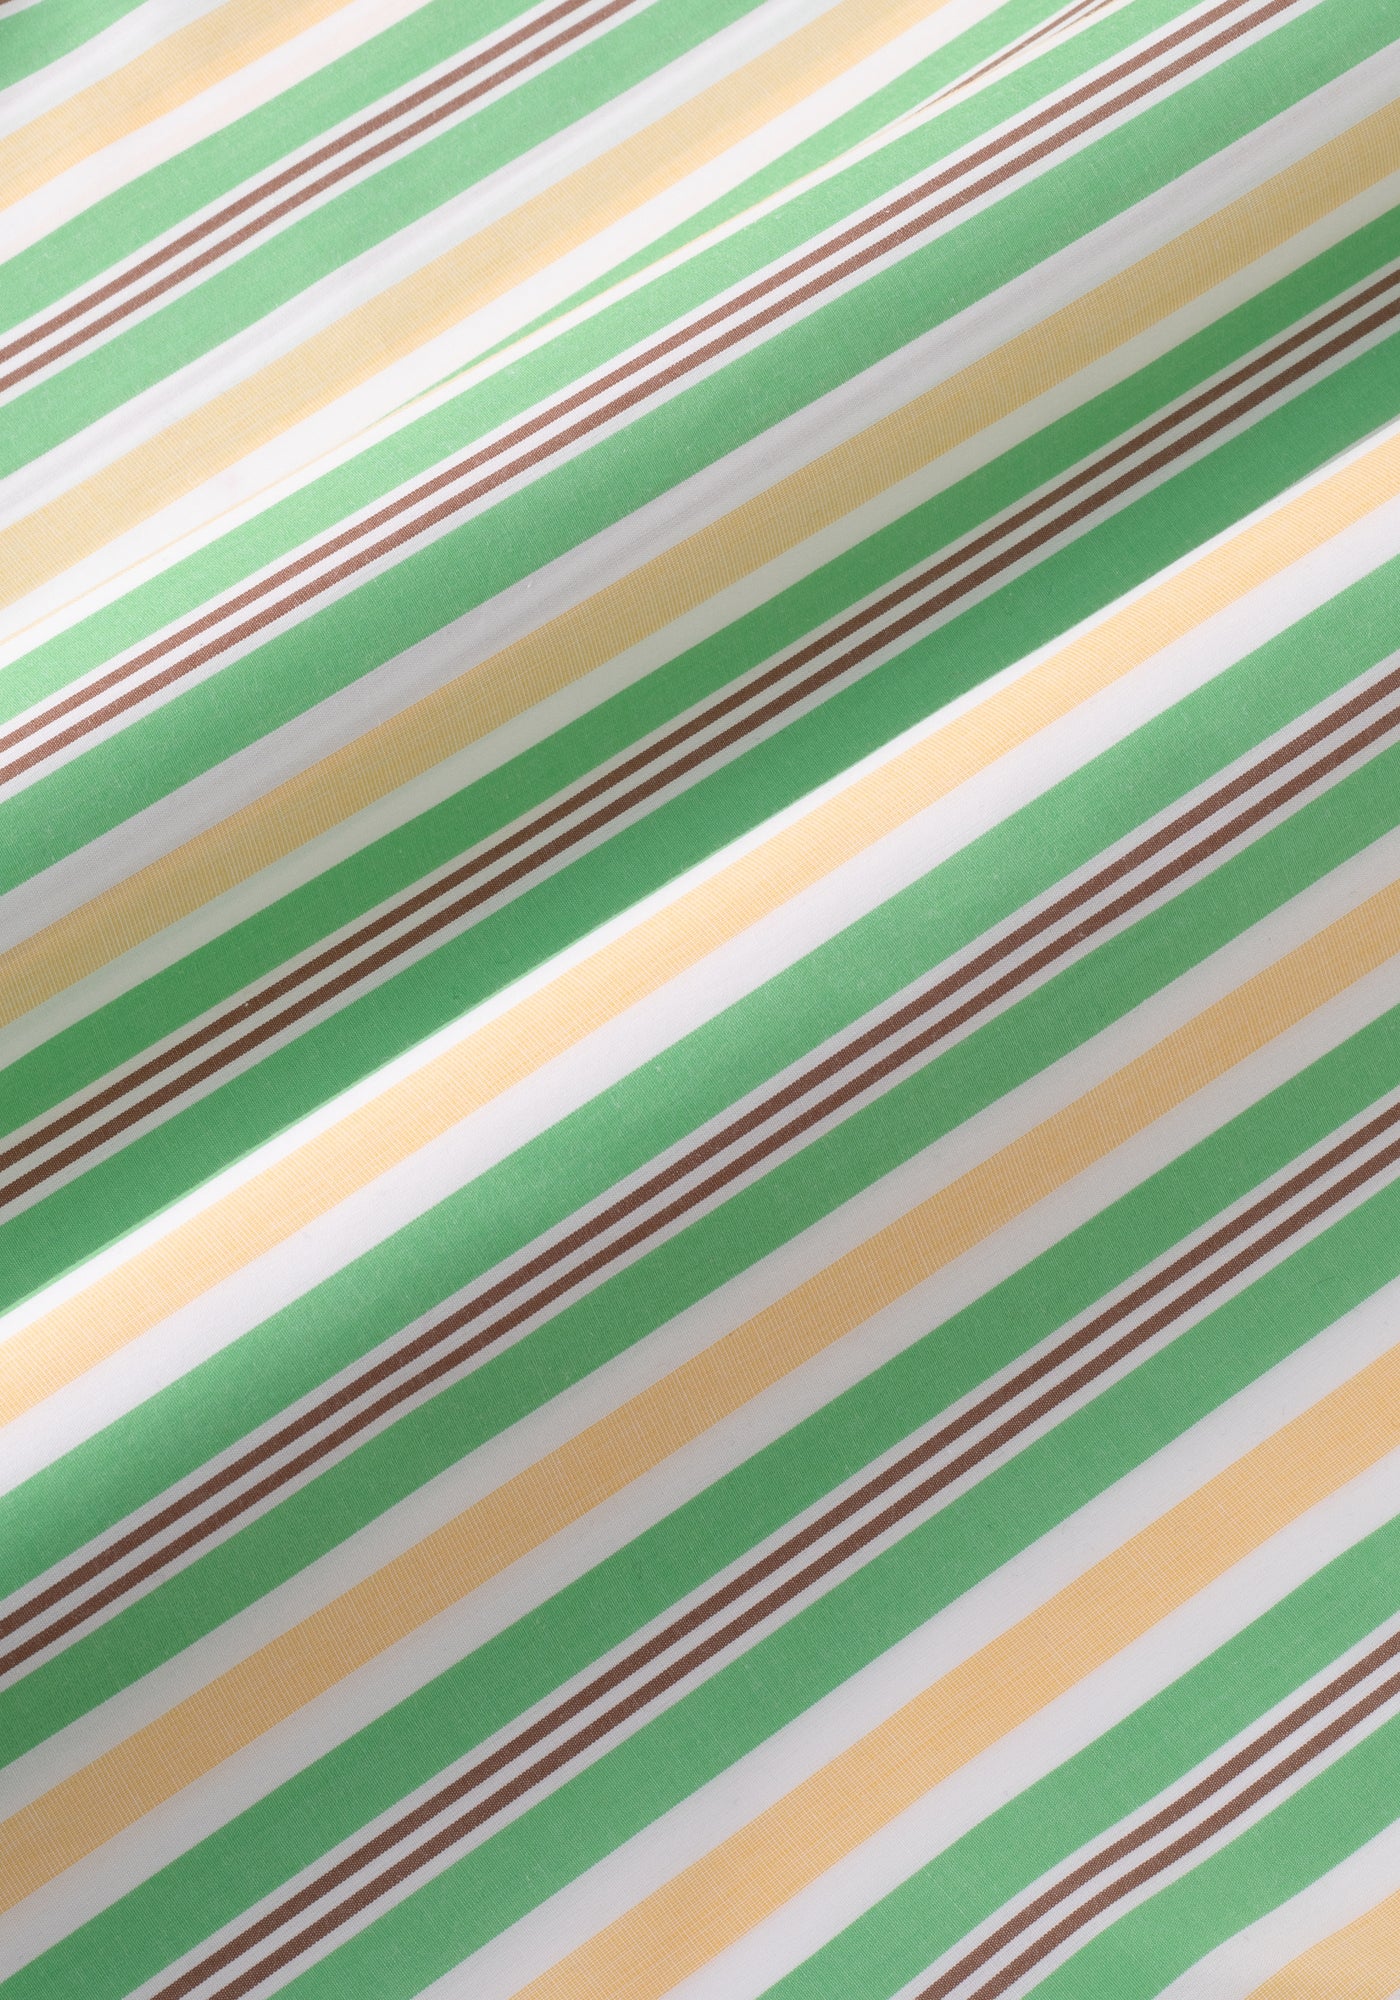 Yellow Green Stripe Poplin Shirt